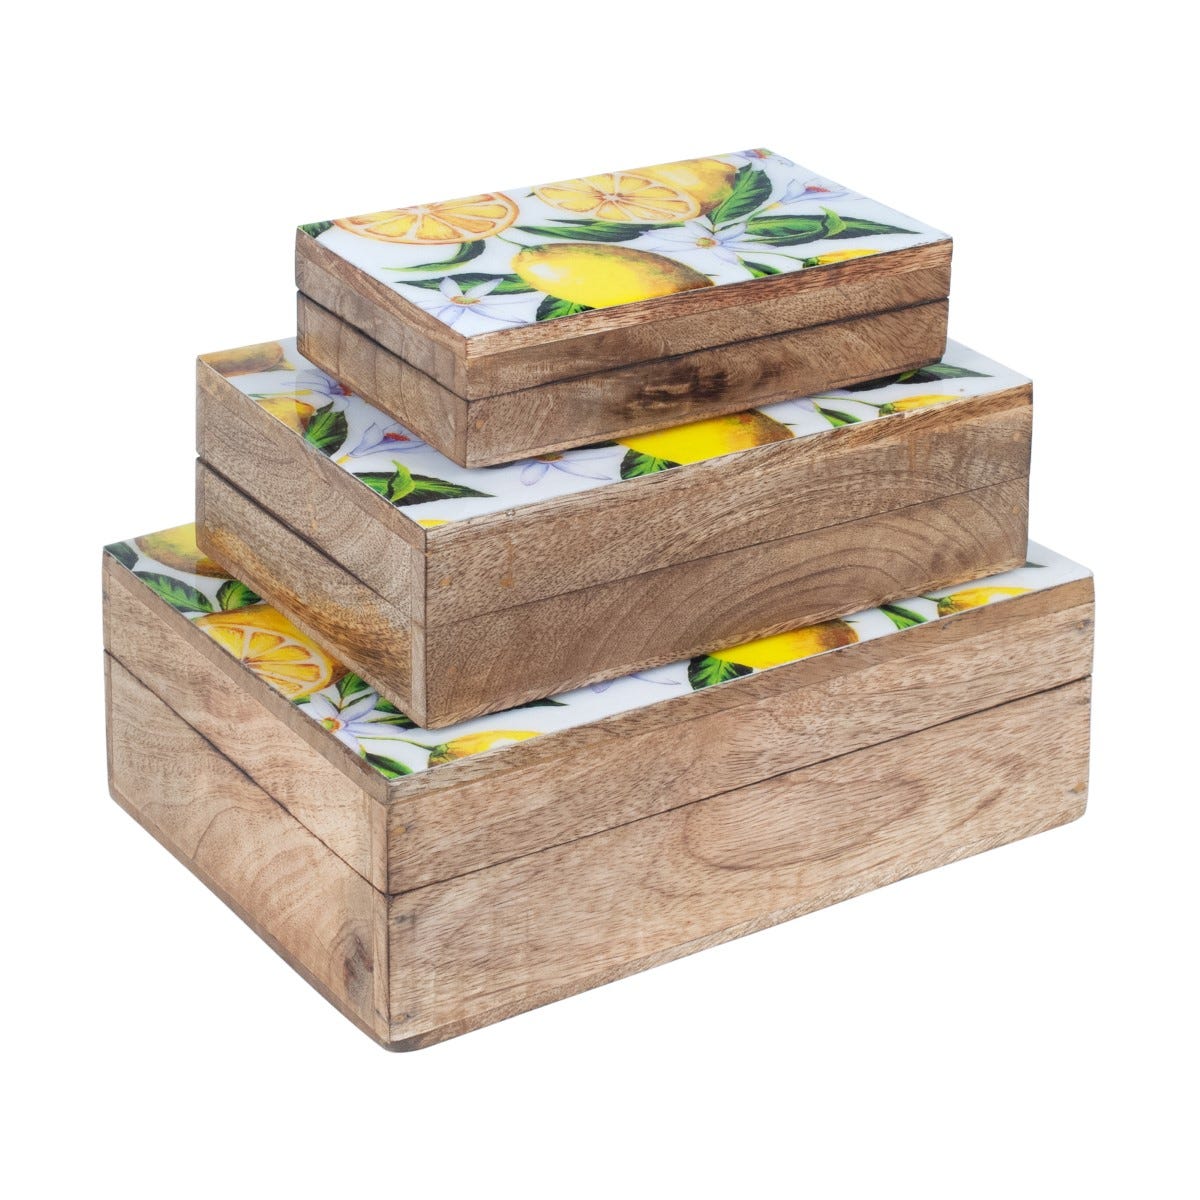 By Sigris - Caja Madera Decorativa, Cajitas de Madera - Set de 3 Cajas  Diferentes Tamaños, Diseño: Limones Decor And Go